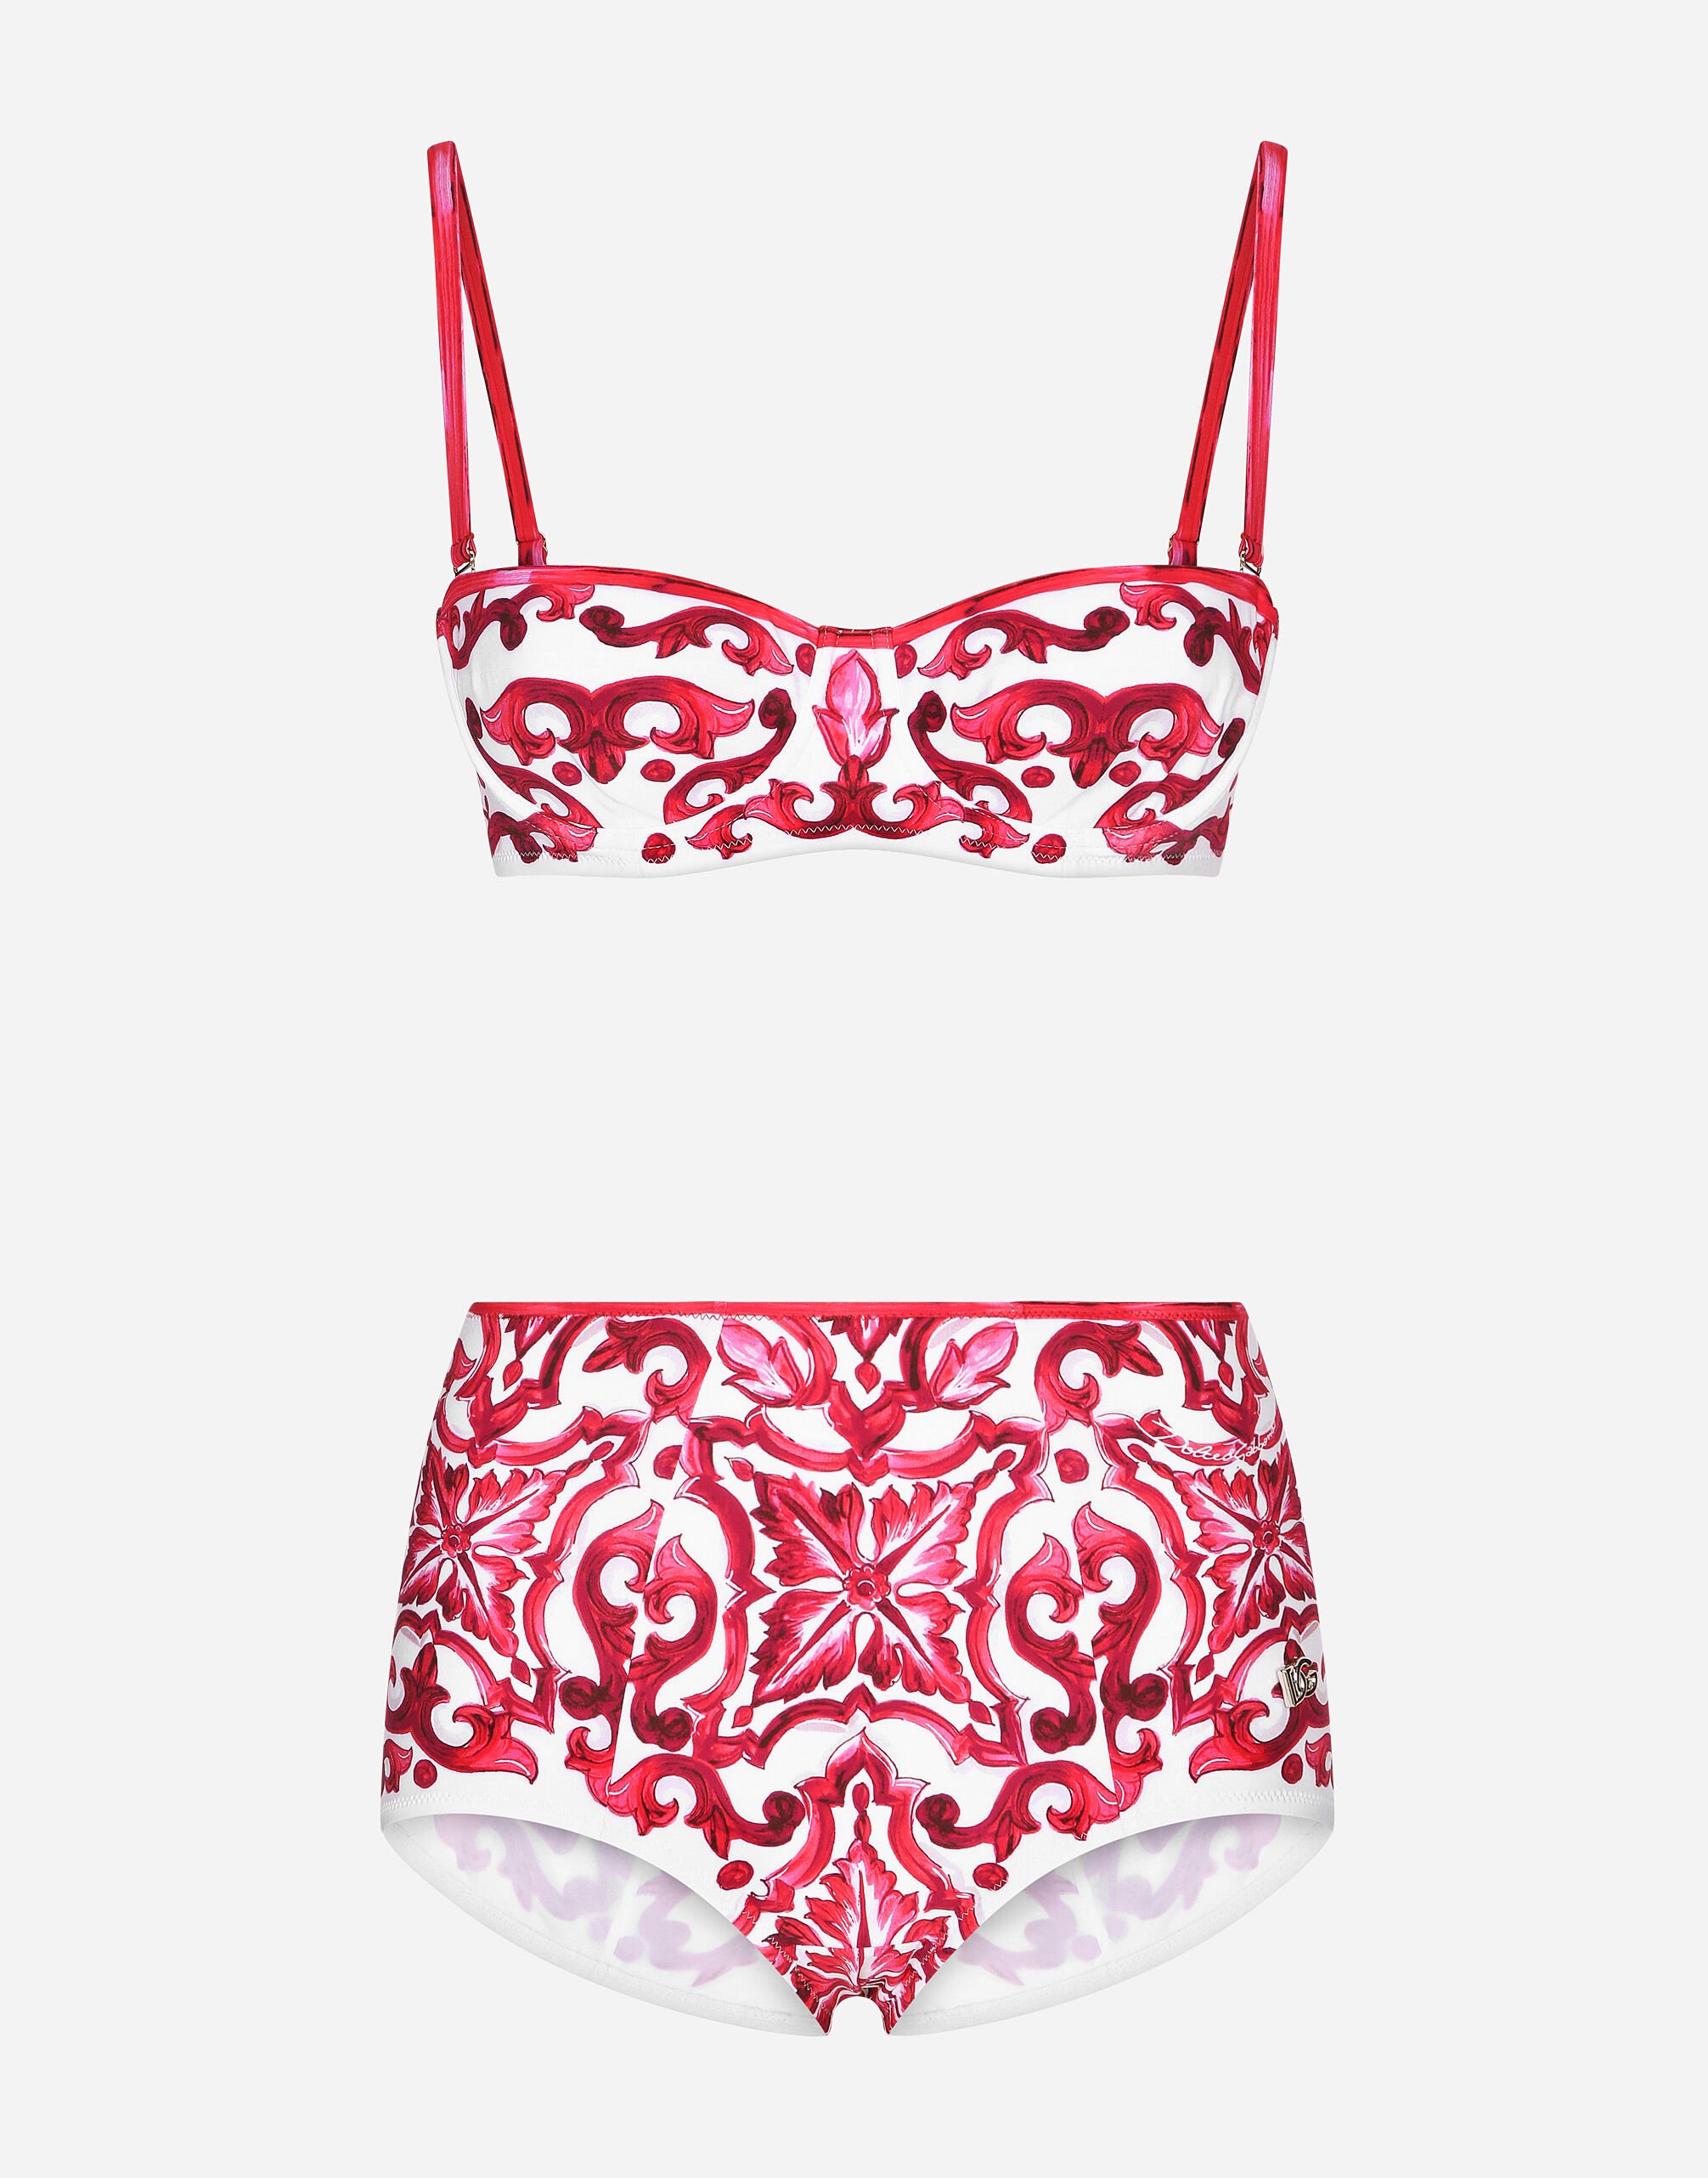 Dolce & Gabbana Majolica print balconette bikini top and bottoms White BB7287AW576